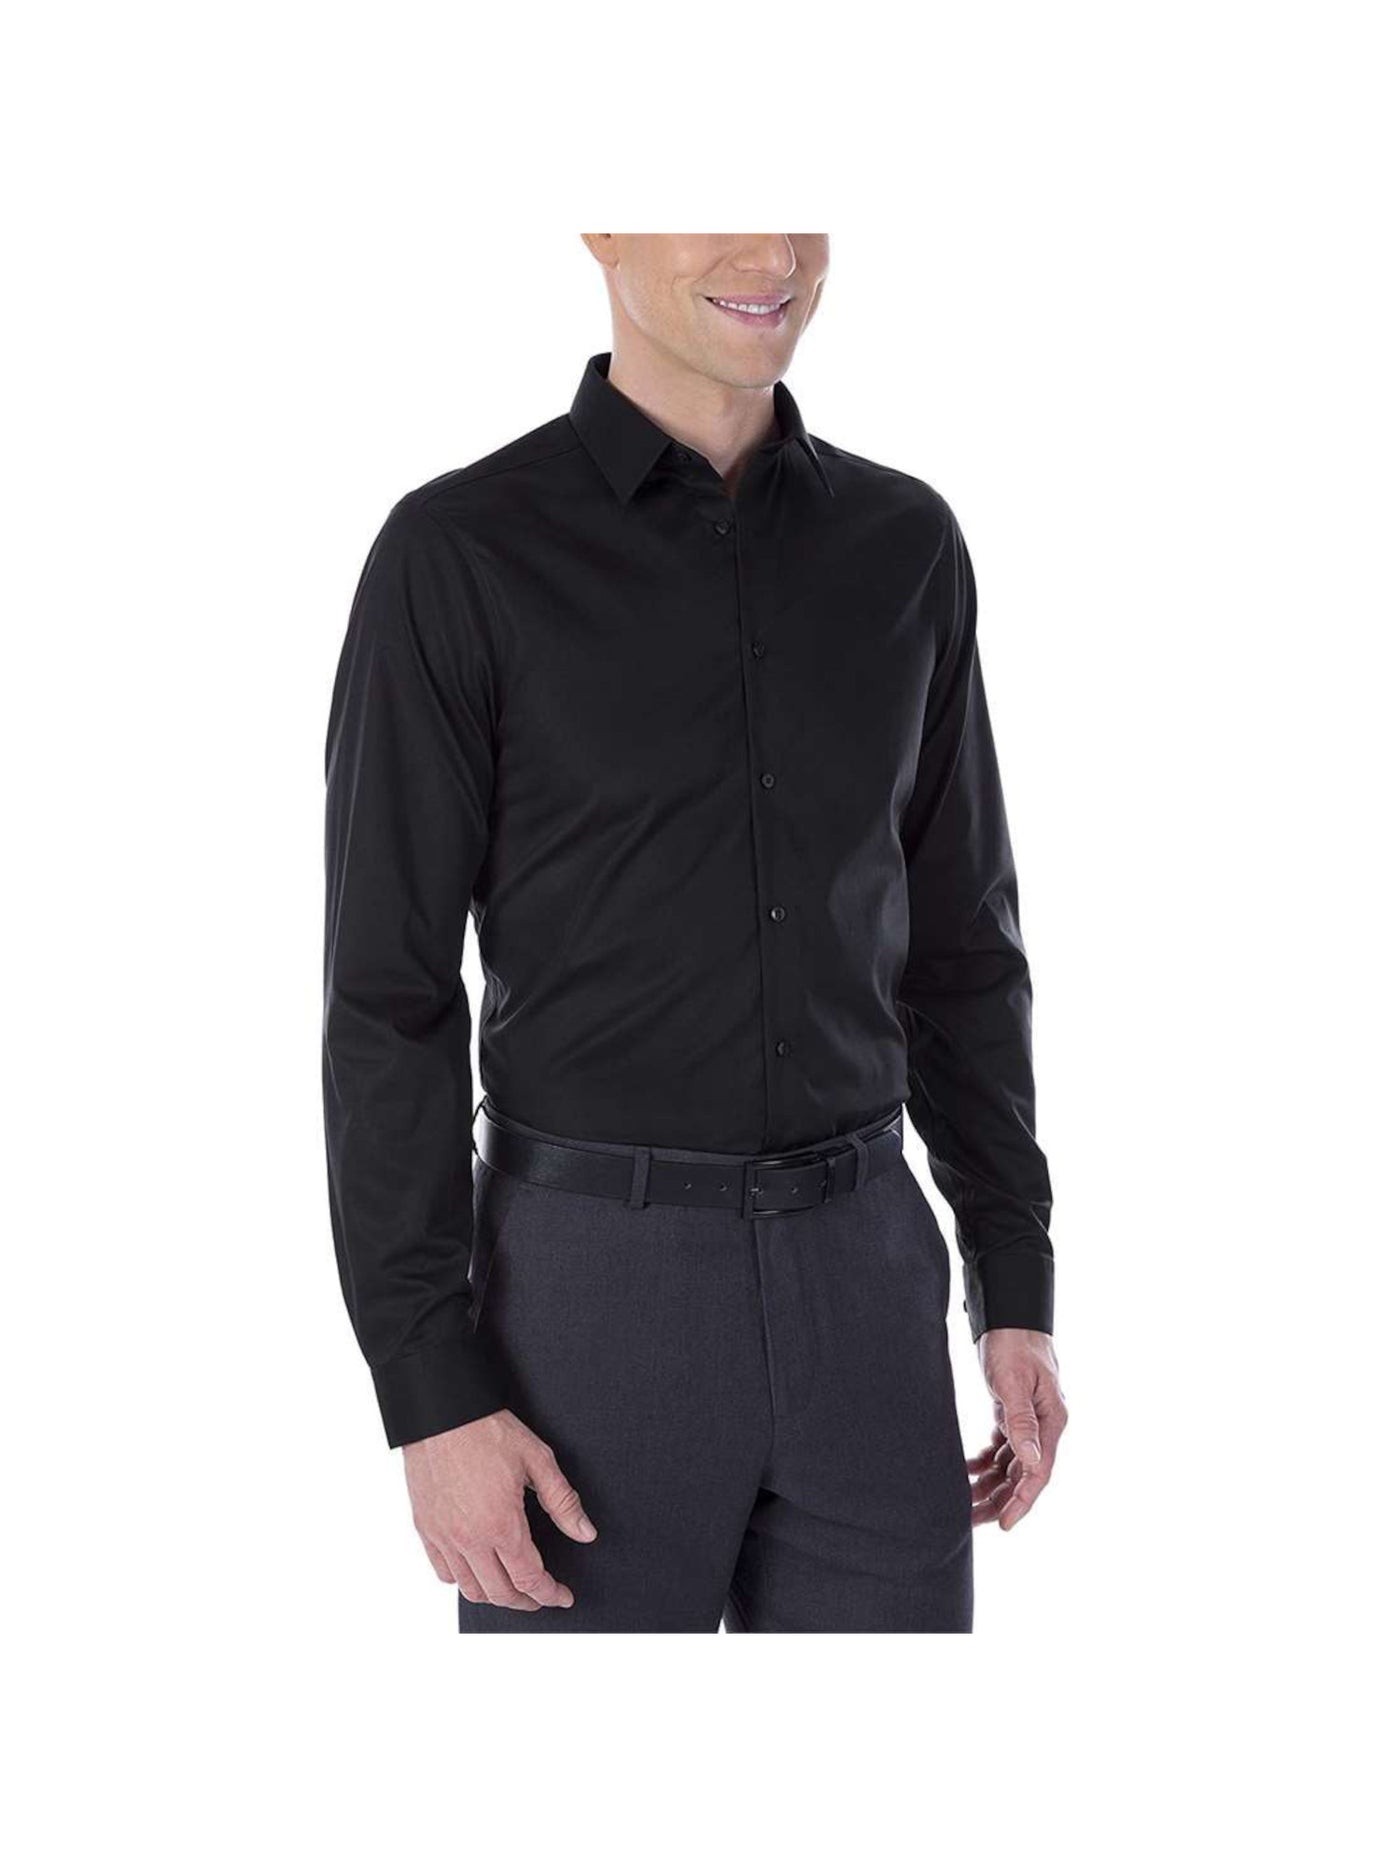 CALVIN KLEIN Mens Black Spread Collar Slim Fit Button Down Shirt M 15- 32/33